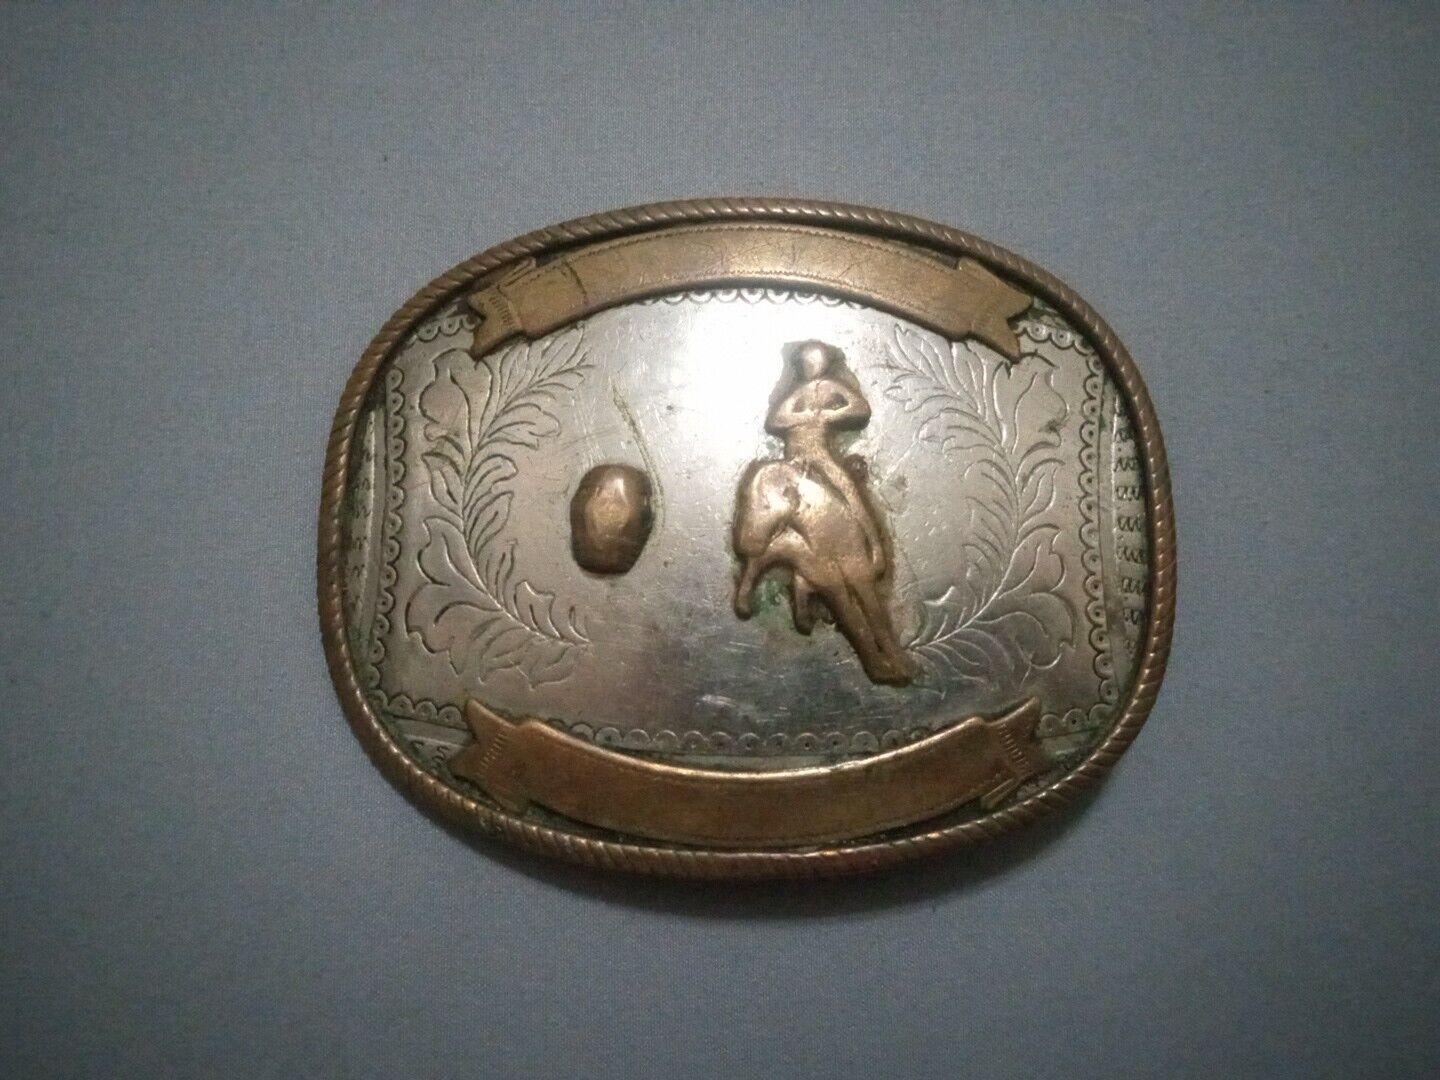 Vintage Cowboy Belt Buckle Brass And Nickel Silver Older Design Very Rare Unique